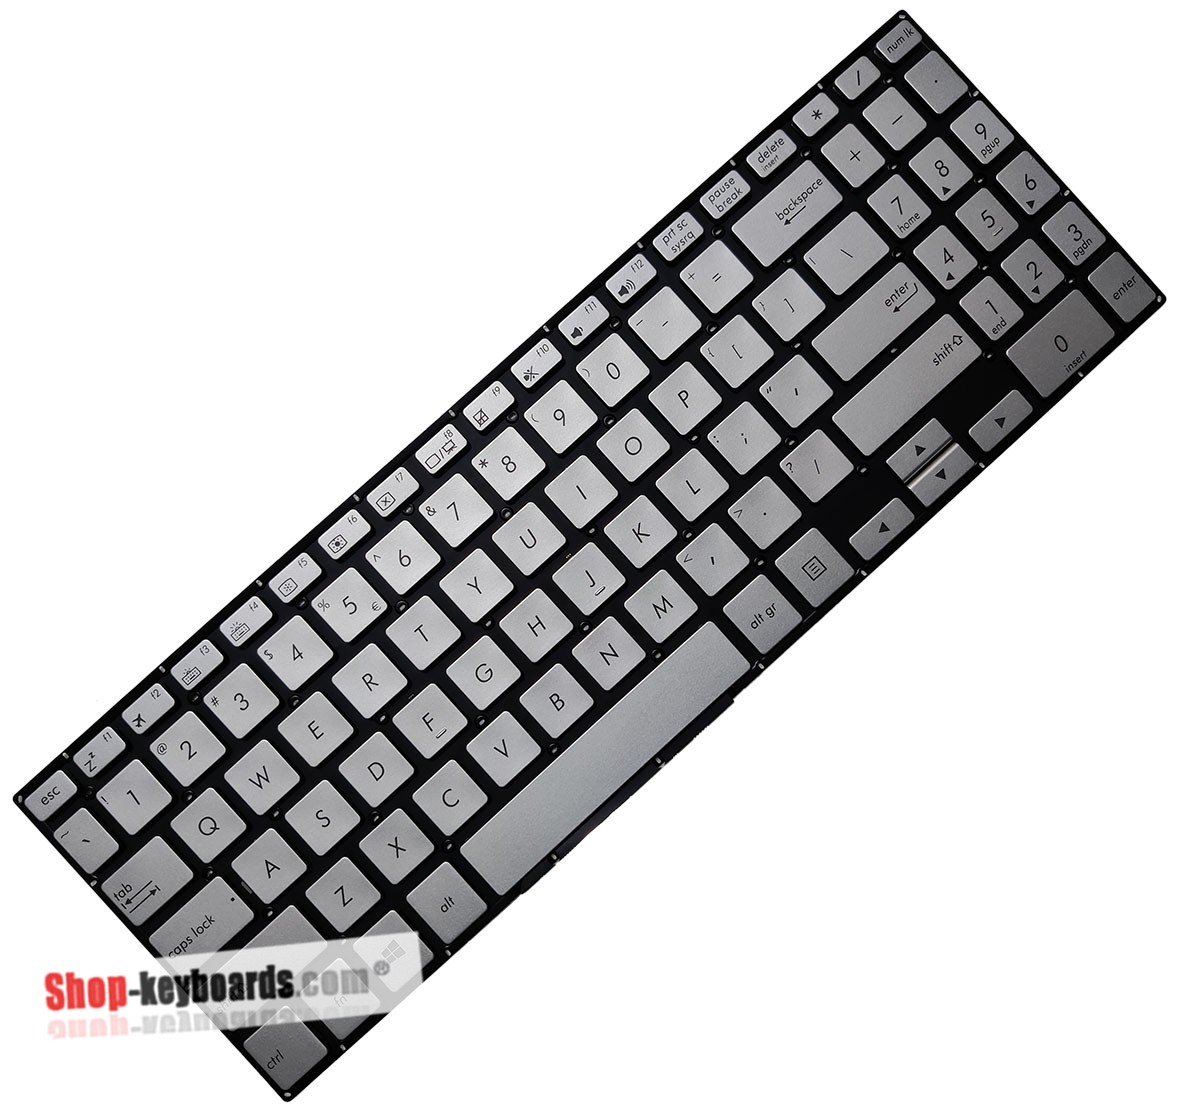 Asus AEBKKY00010  Keyboard replacement